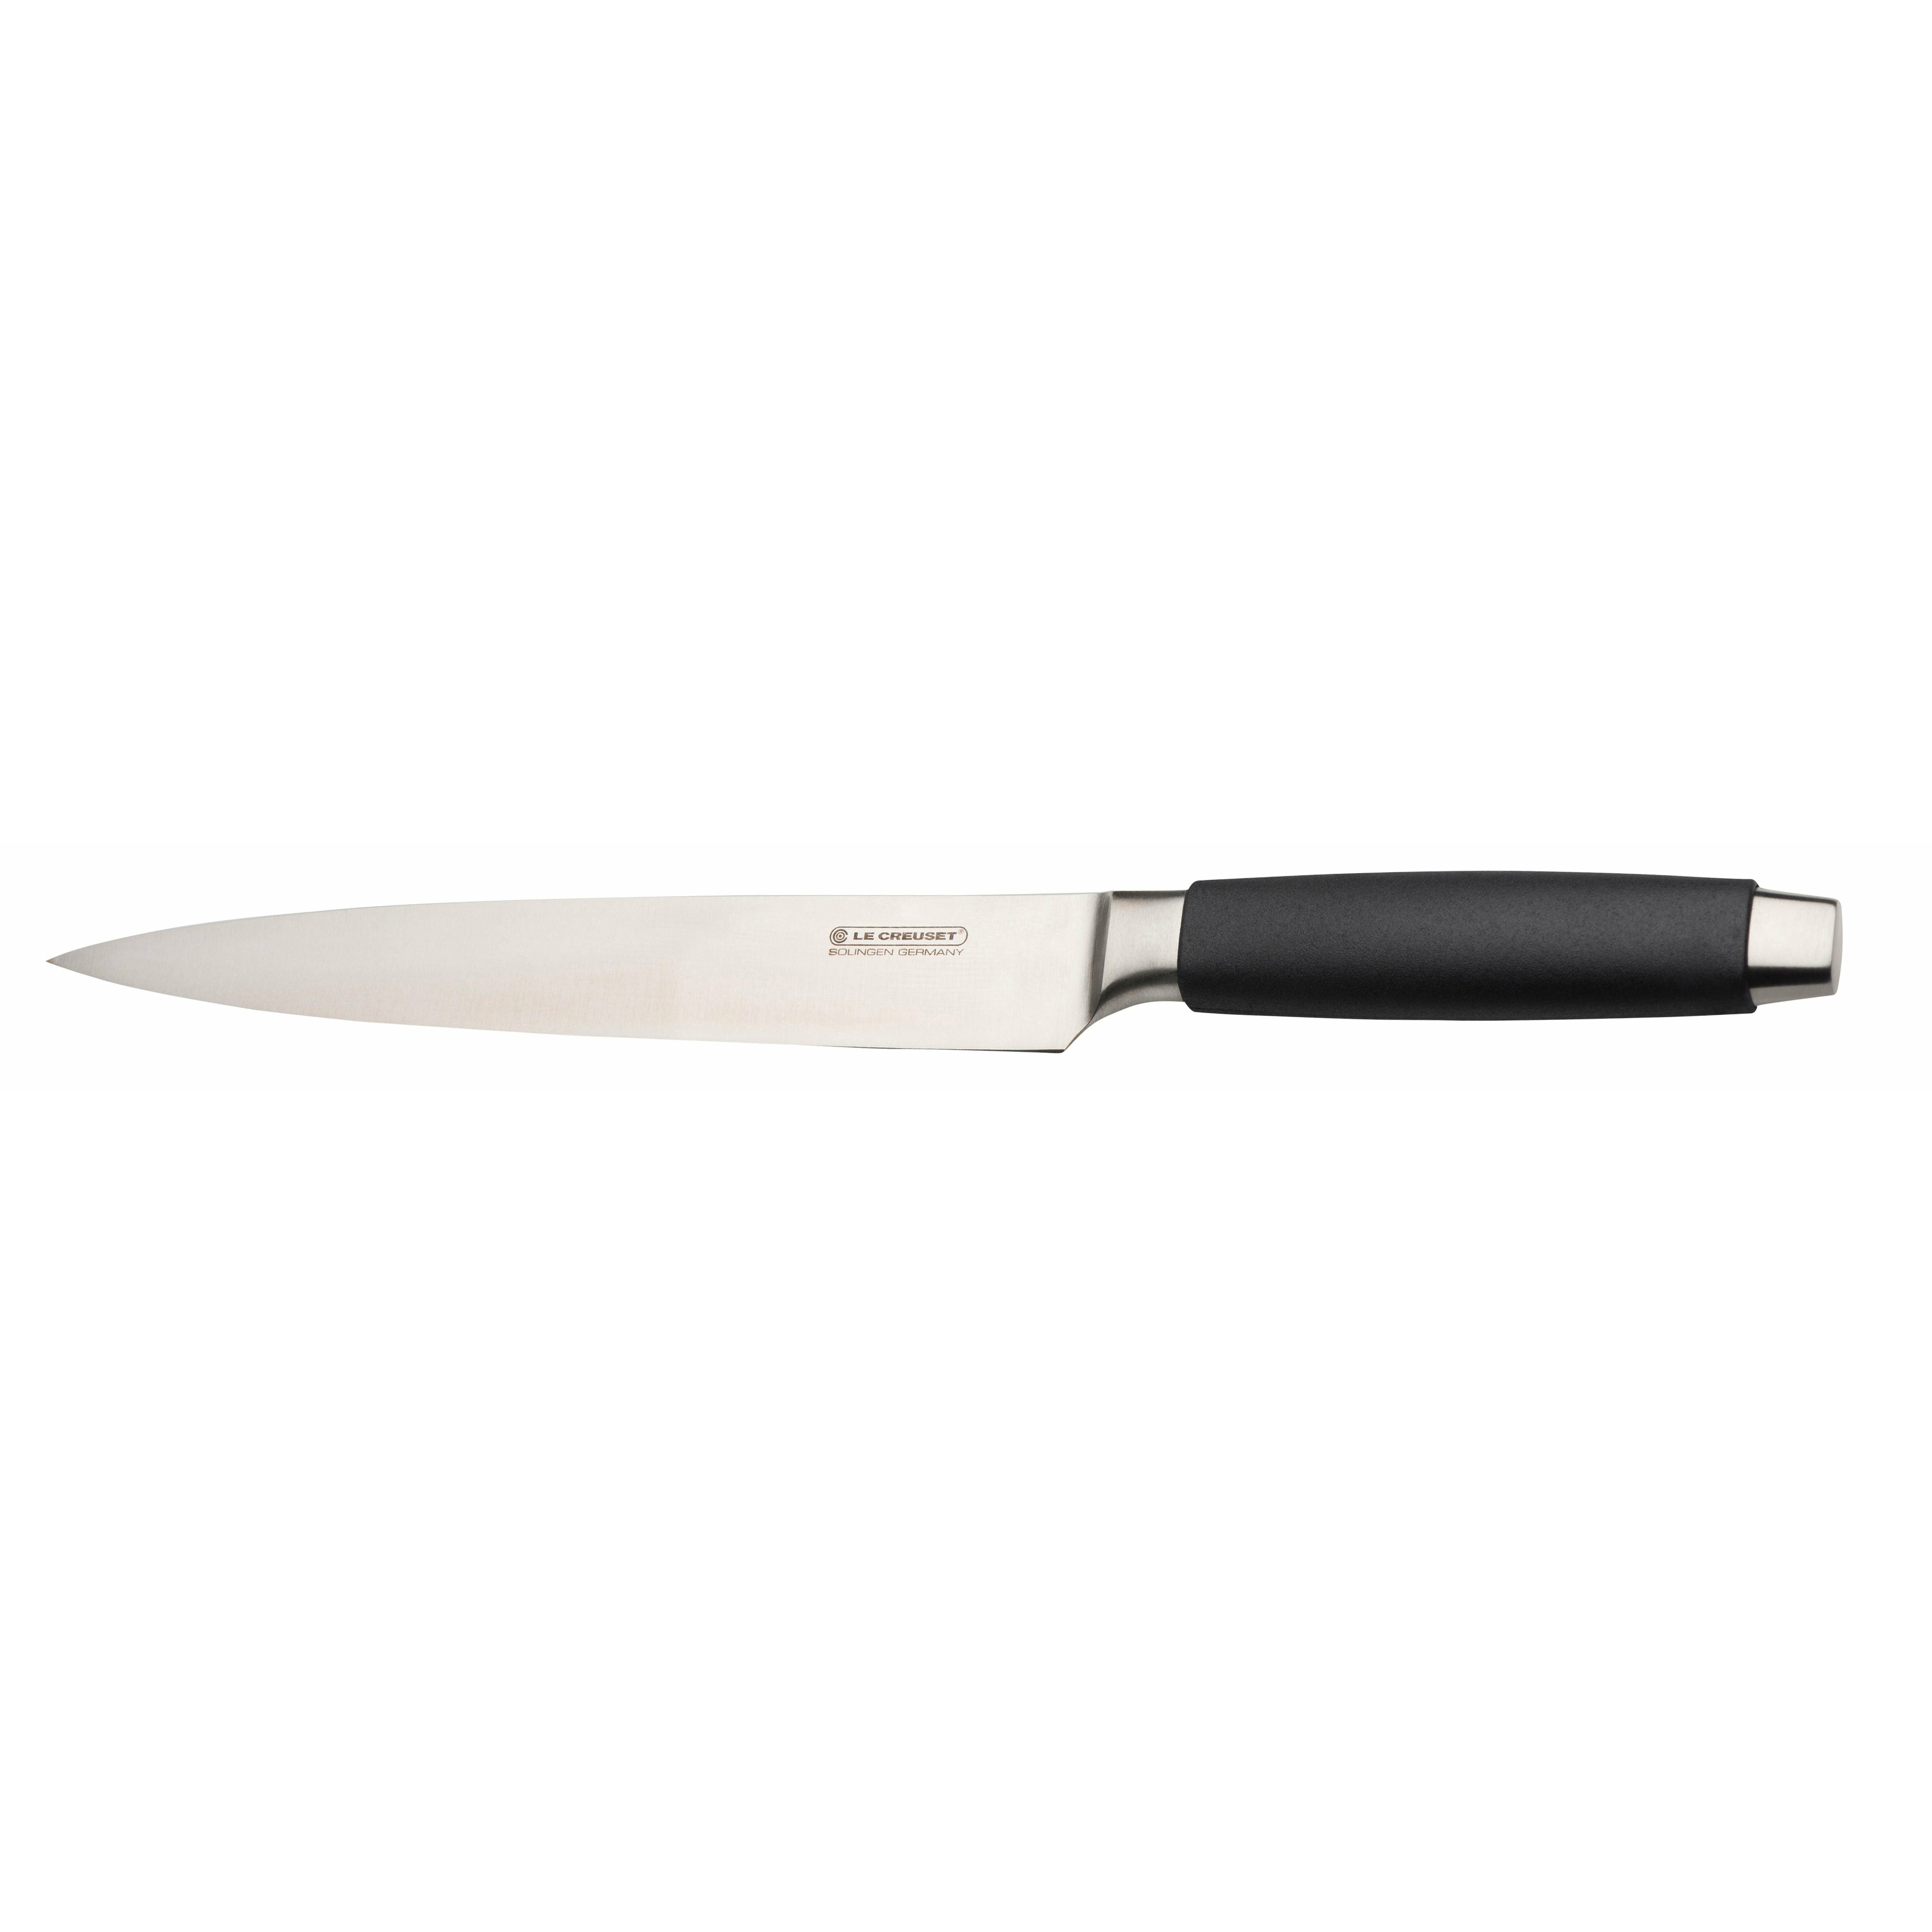 Le creuset skinke knivstandard med svart håndtak, 20 cm